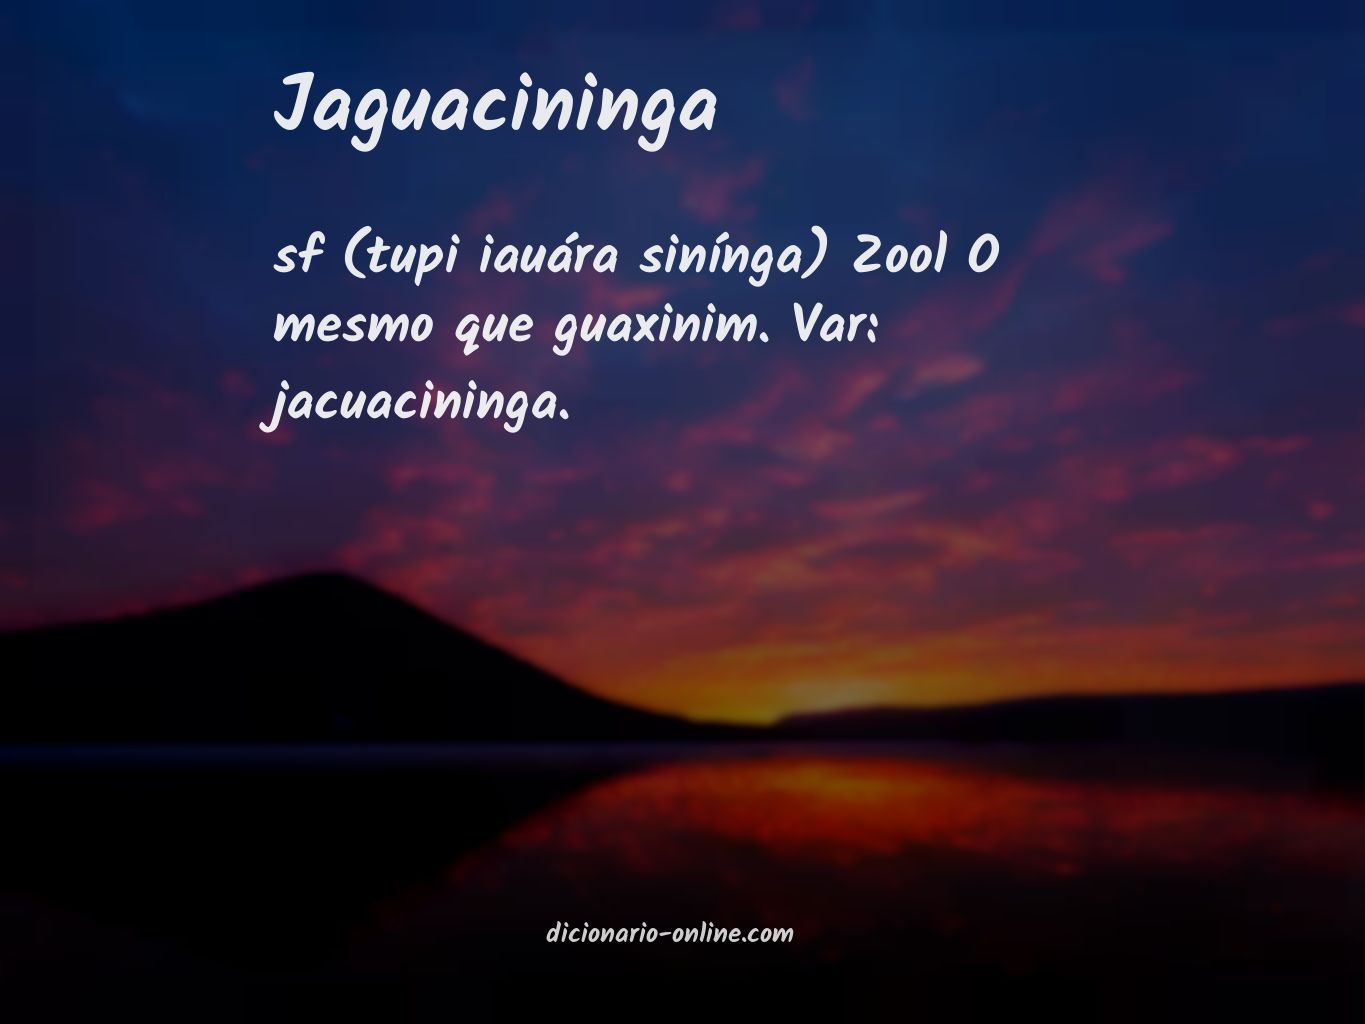 Significado de jaguacininga